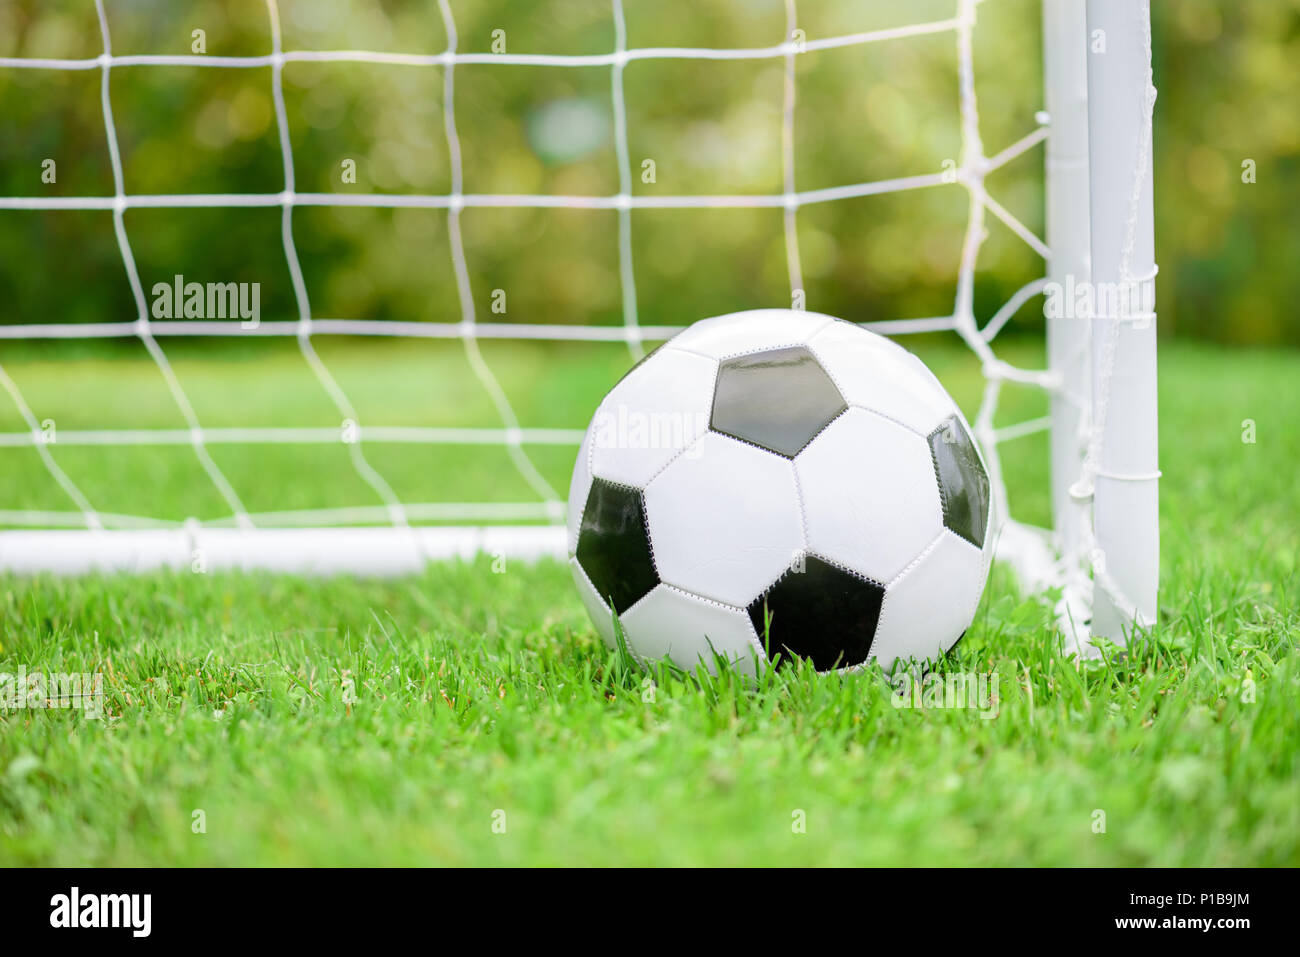 Soccer ball in goal net -Fotos und -Bildmaterial in hoher Auflösung – Alamy